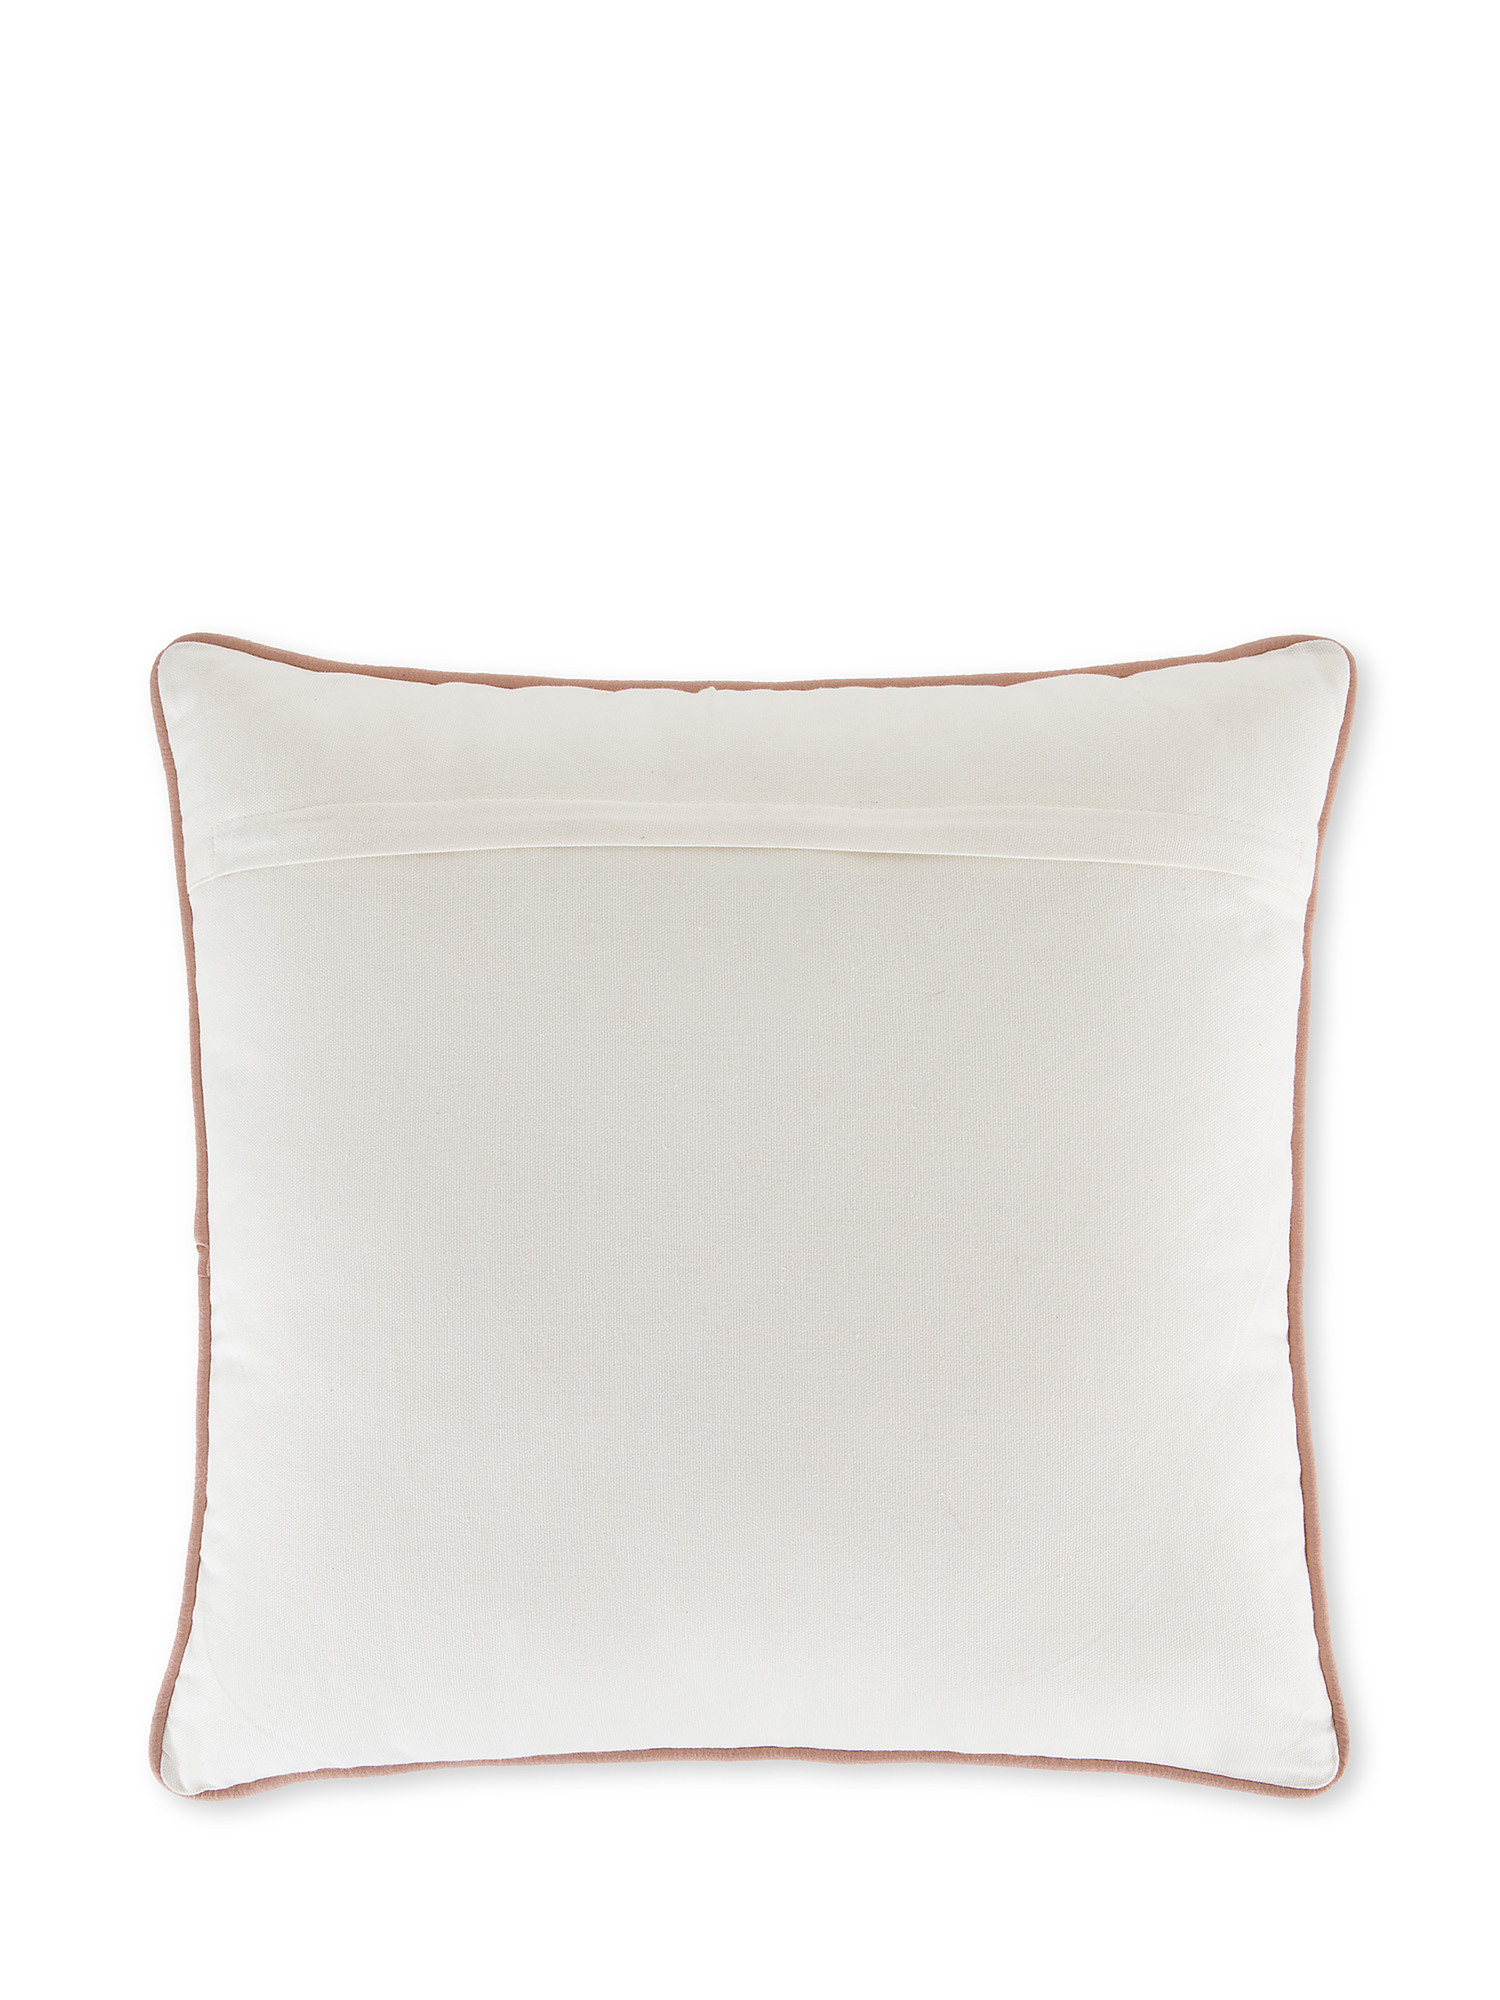 Cuscino ricamo marino 45x45cm, Bianco, large image number 1